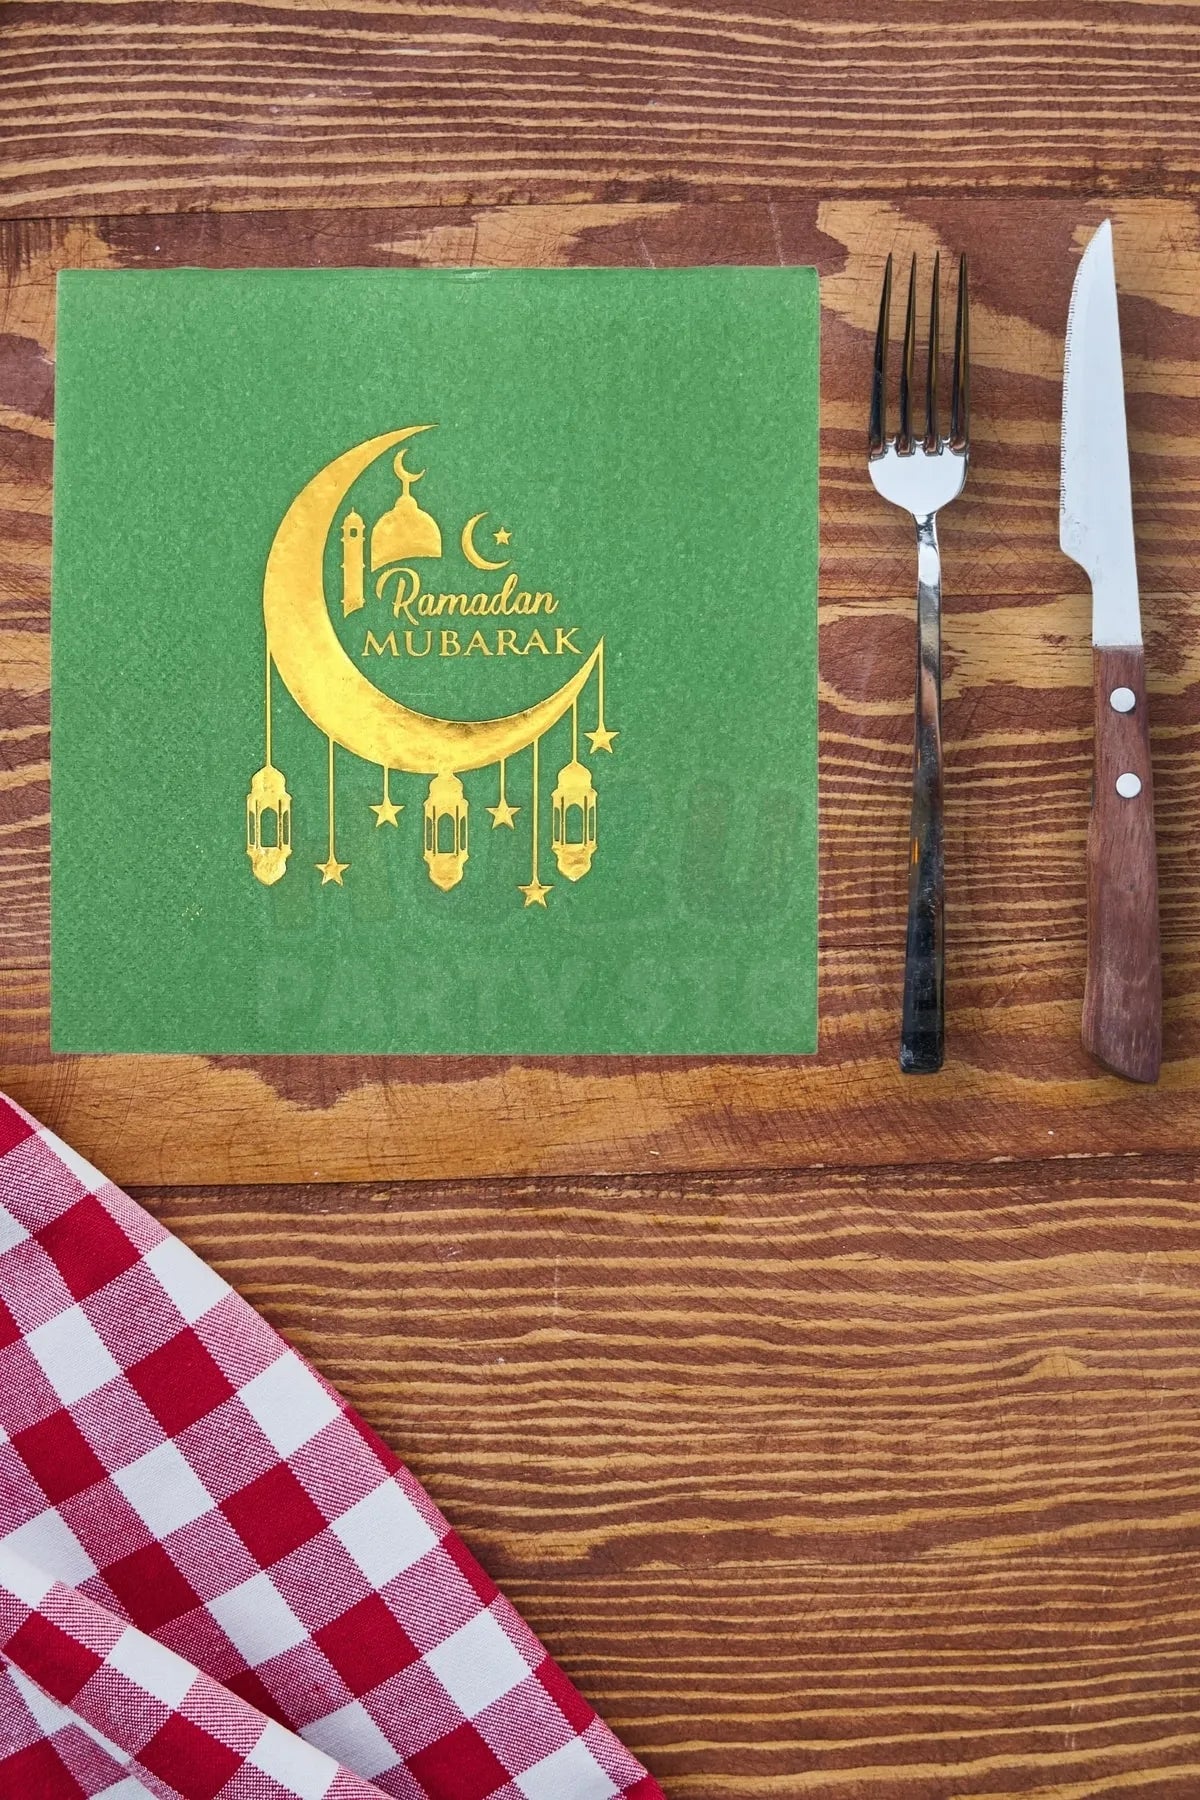 Huzur Party Store Ramadan Mubarak Green Gold Gilded Napkin 16pcs Ramadan Decoration